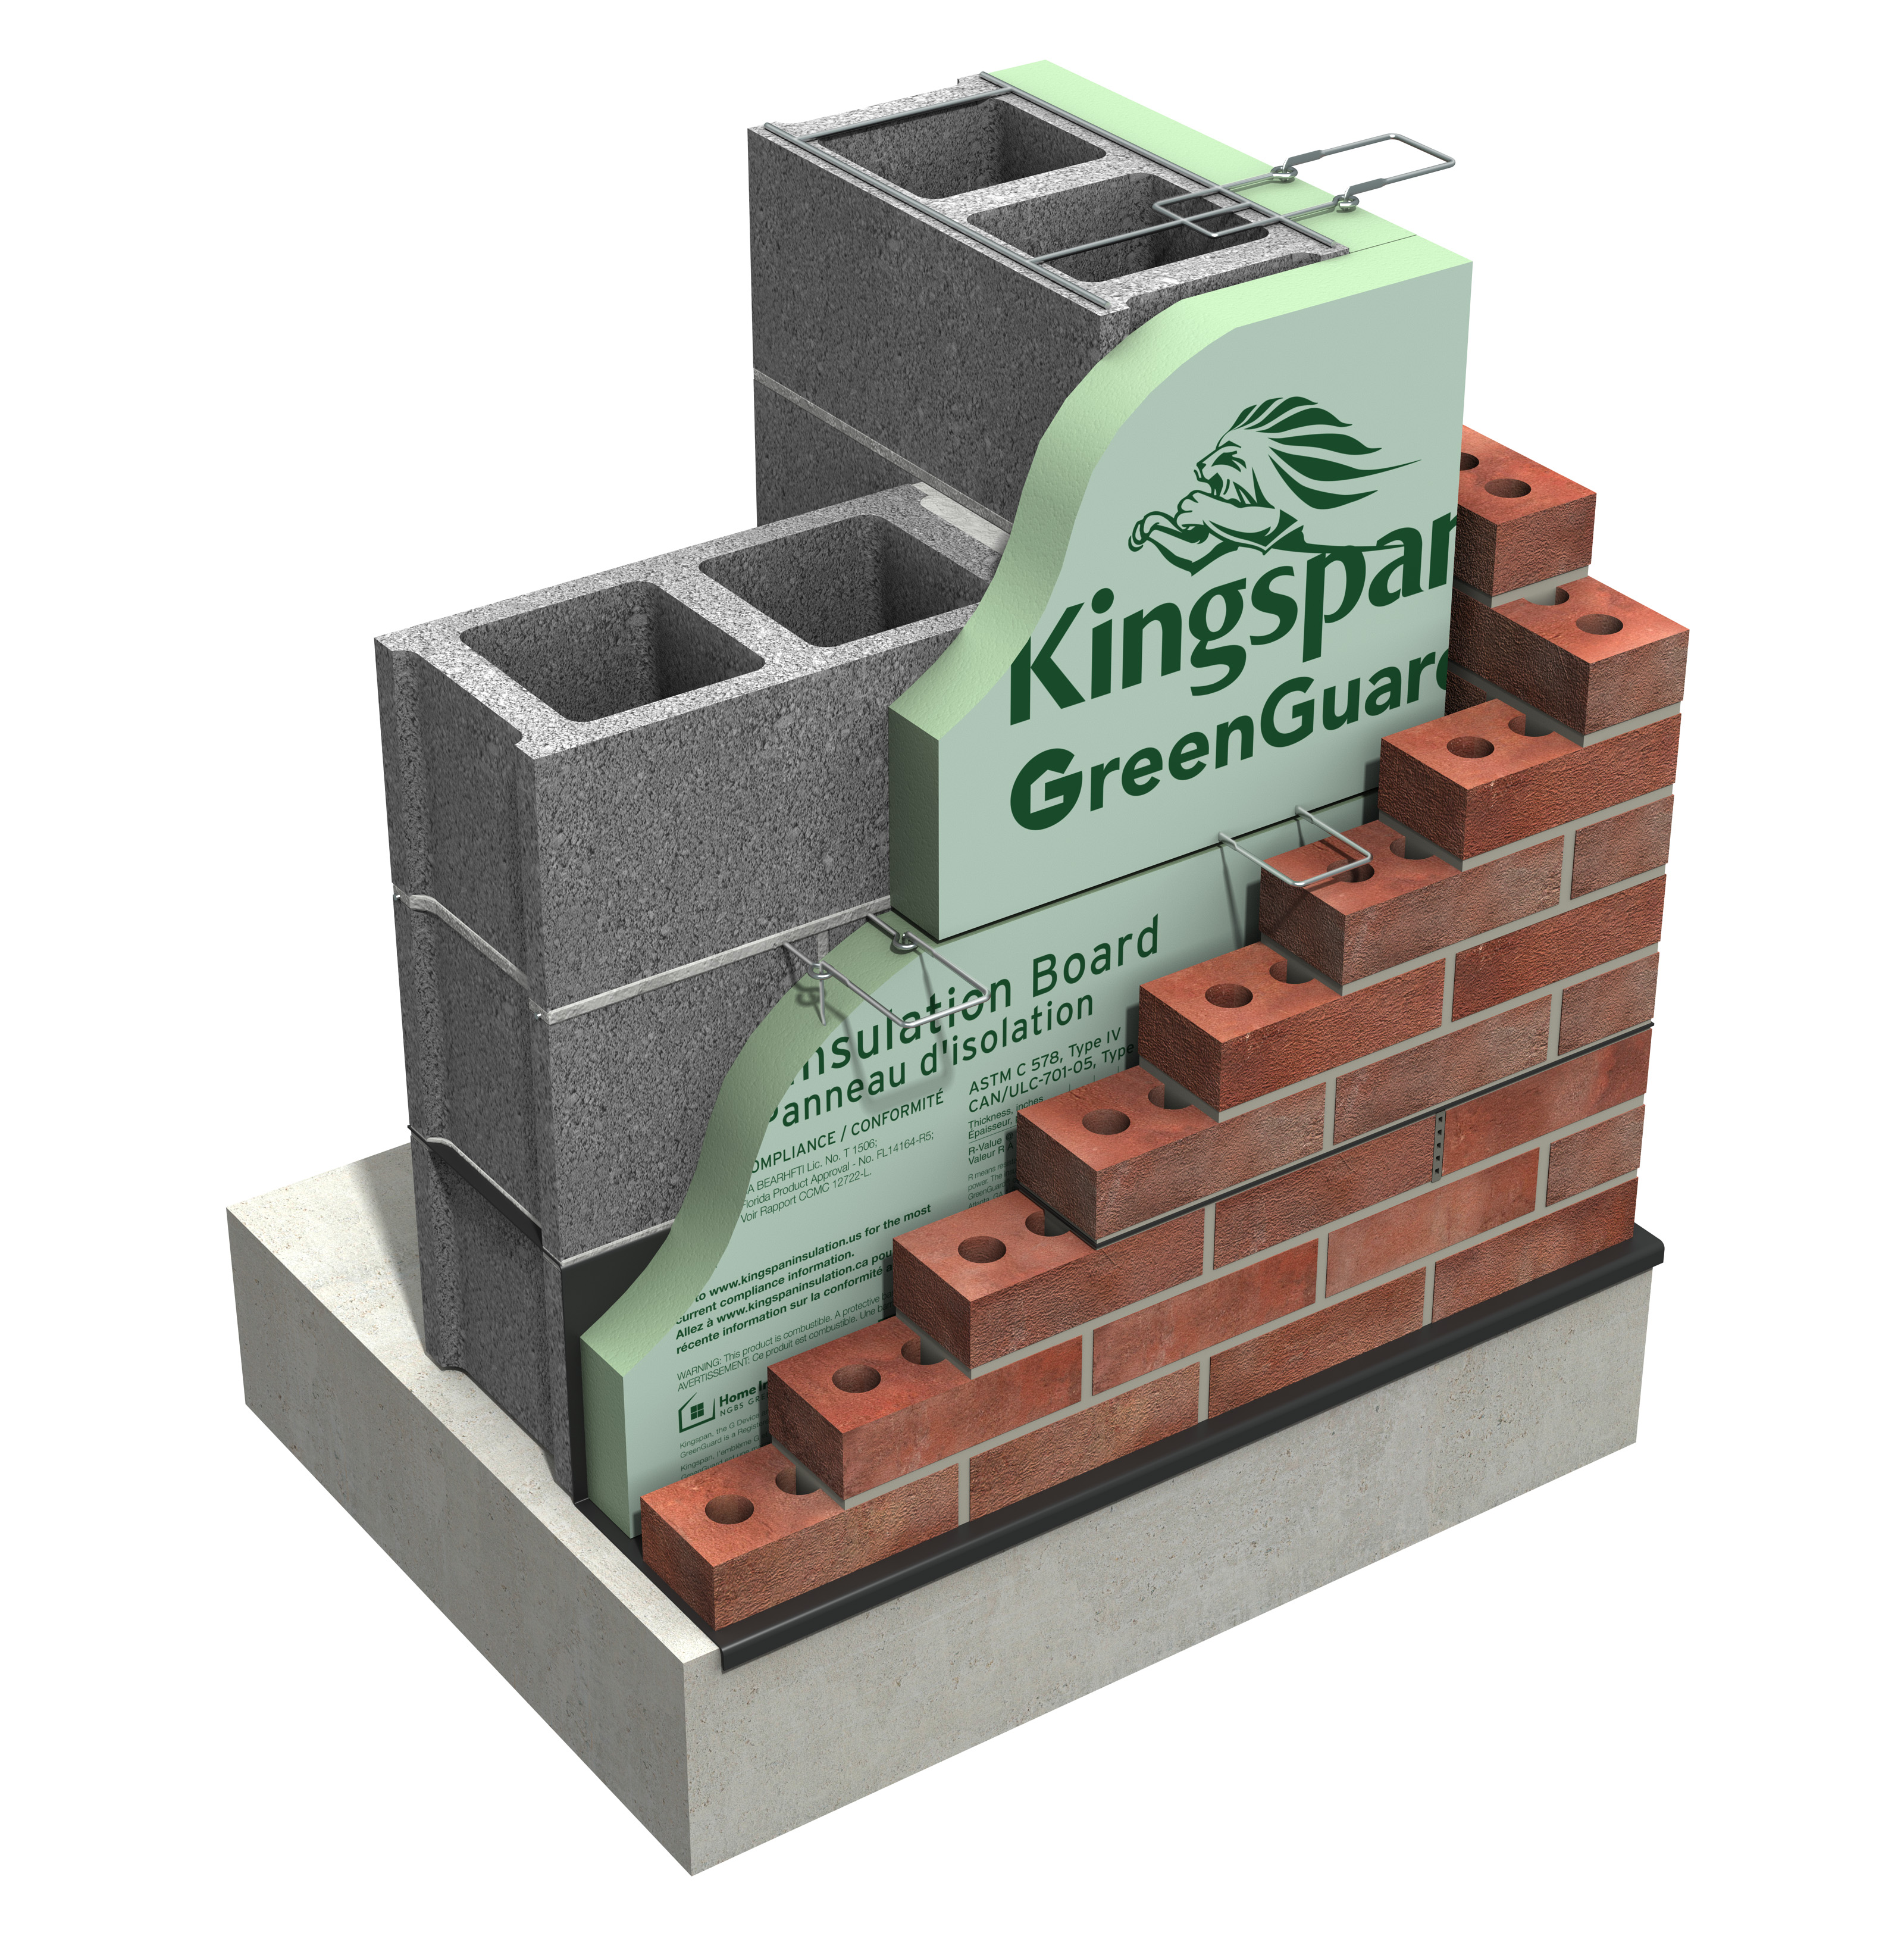 Kingspan Greenguard Xps Insulation Board General Insulation